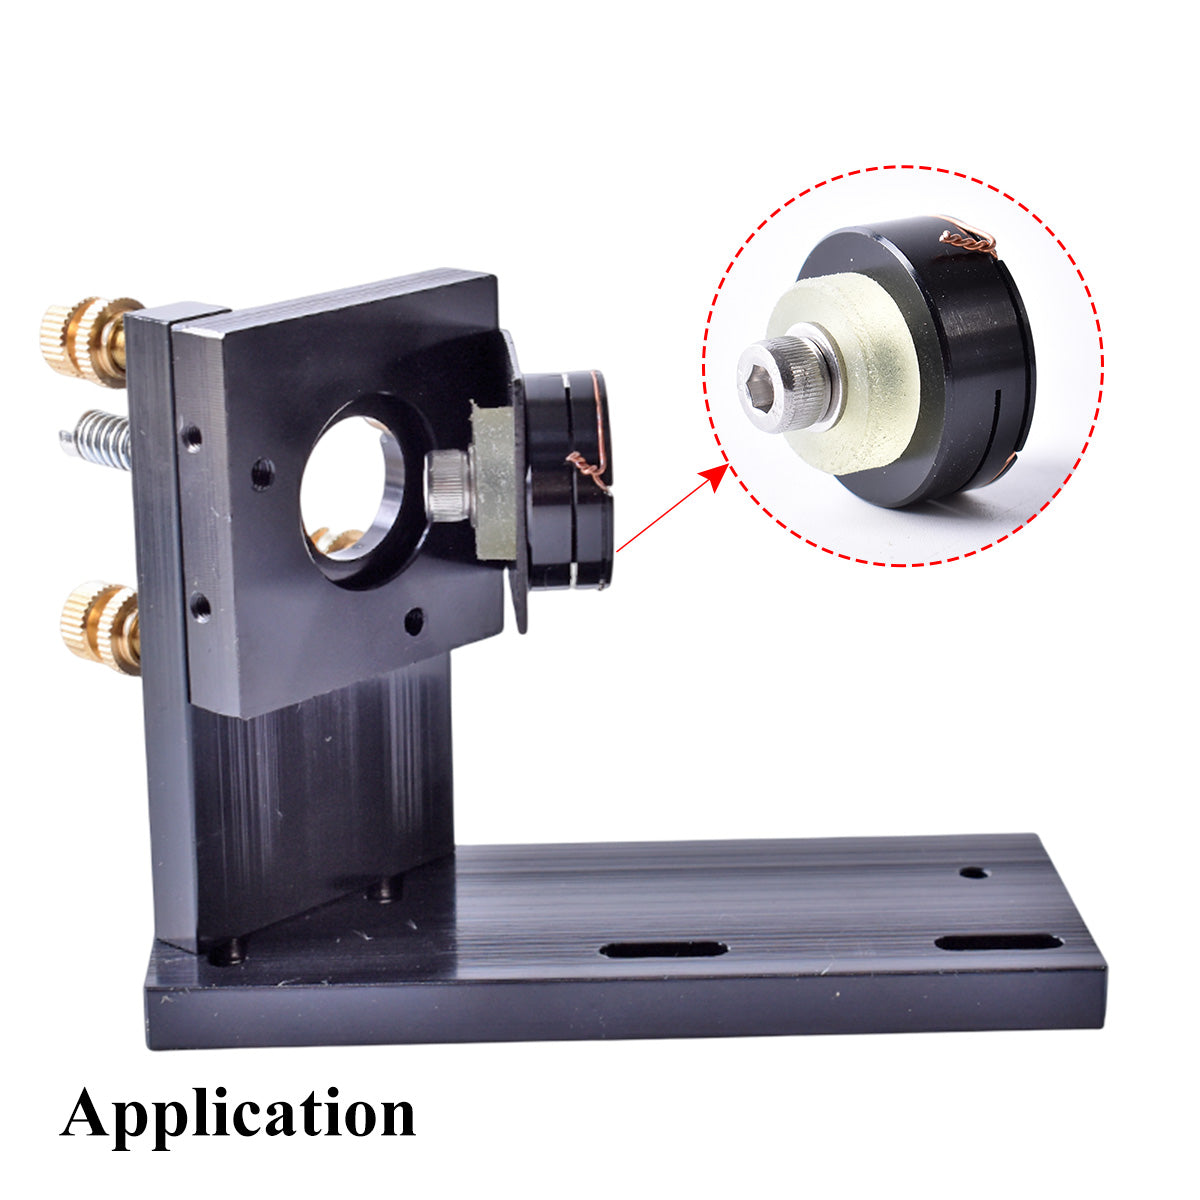 Startnow Dimming Target Light Regulator Alignment Kit Mirror Holder With Laser Path Calibrating Device